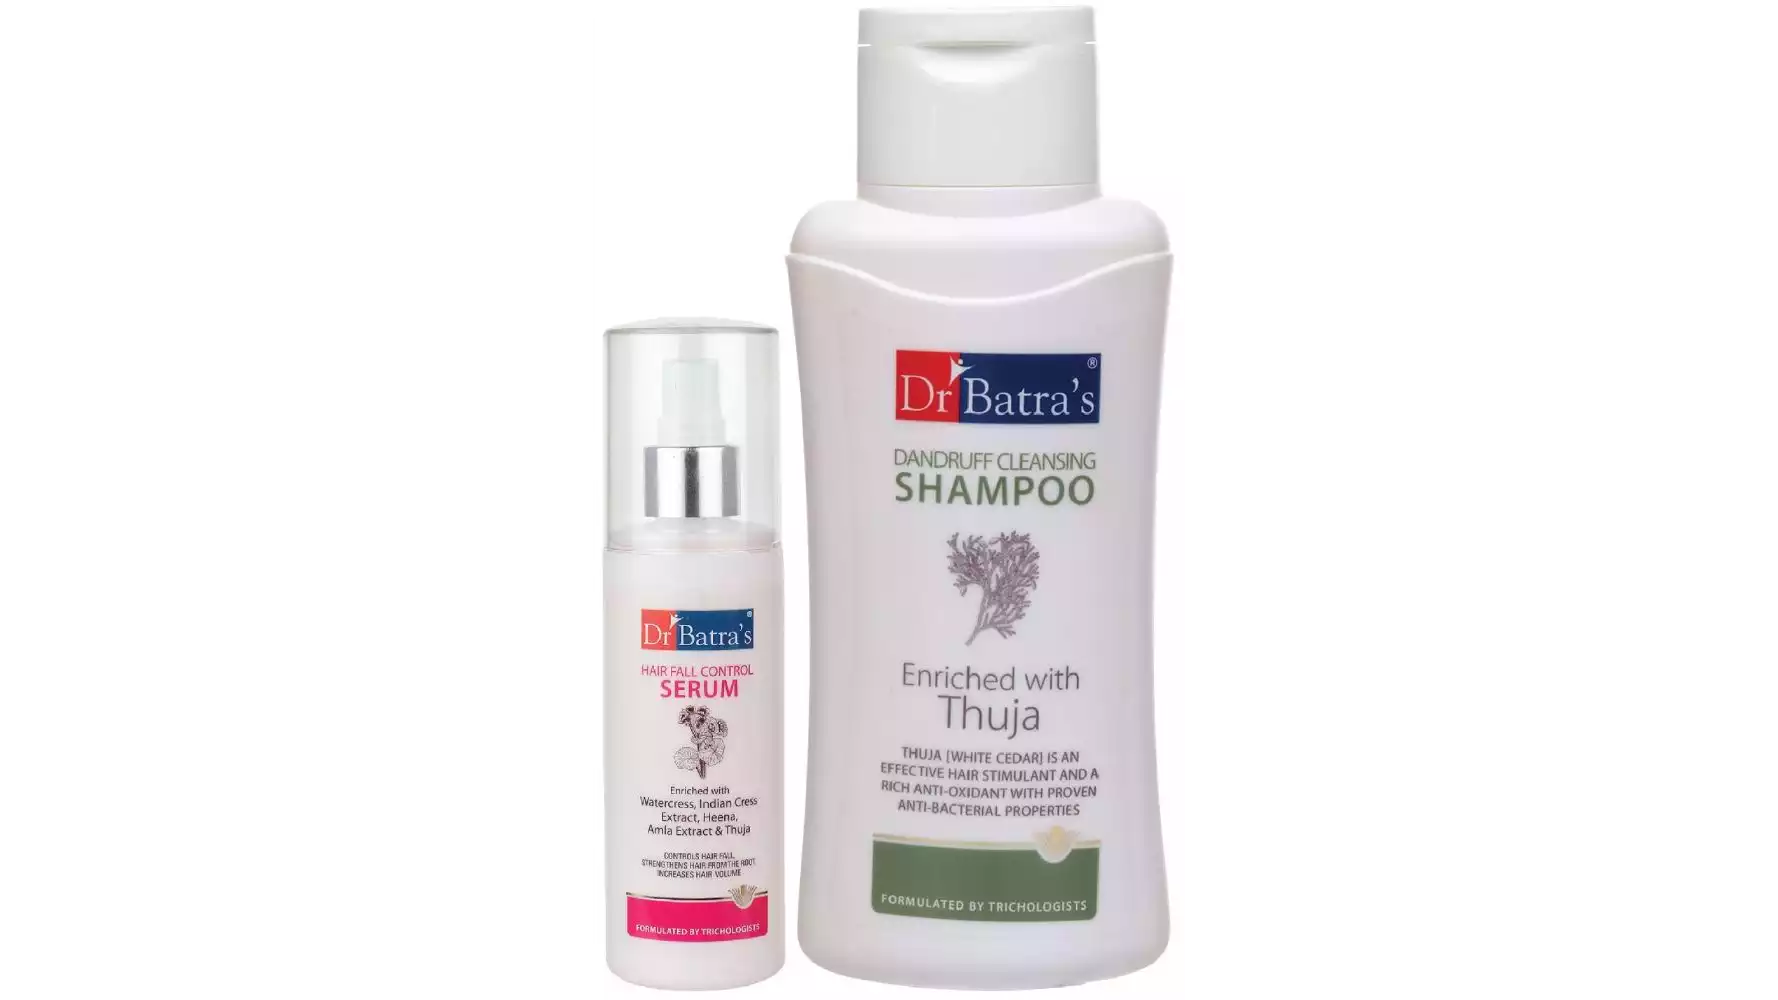 Dr Batras Hair Fall Control Serum And Dandruff Cleansing Shampoo Combo (125ML+500ML) (1Pack)